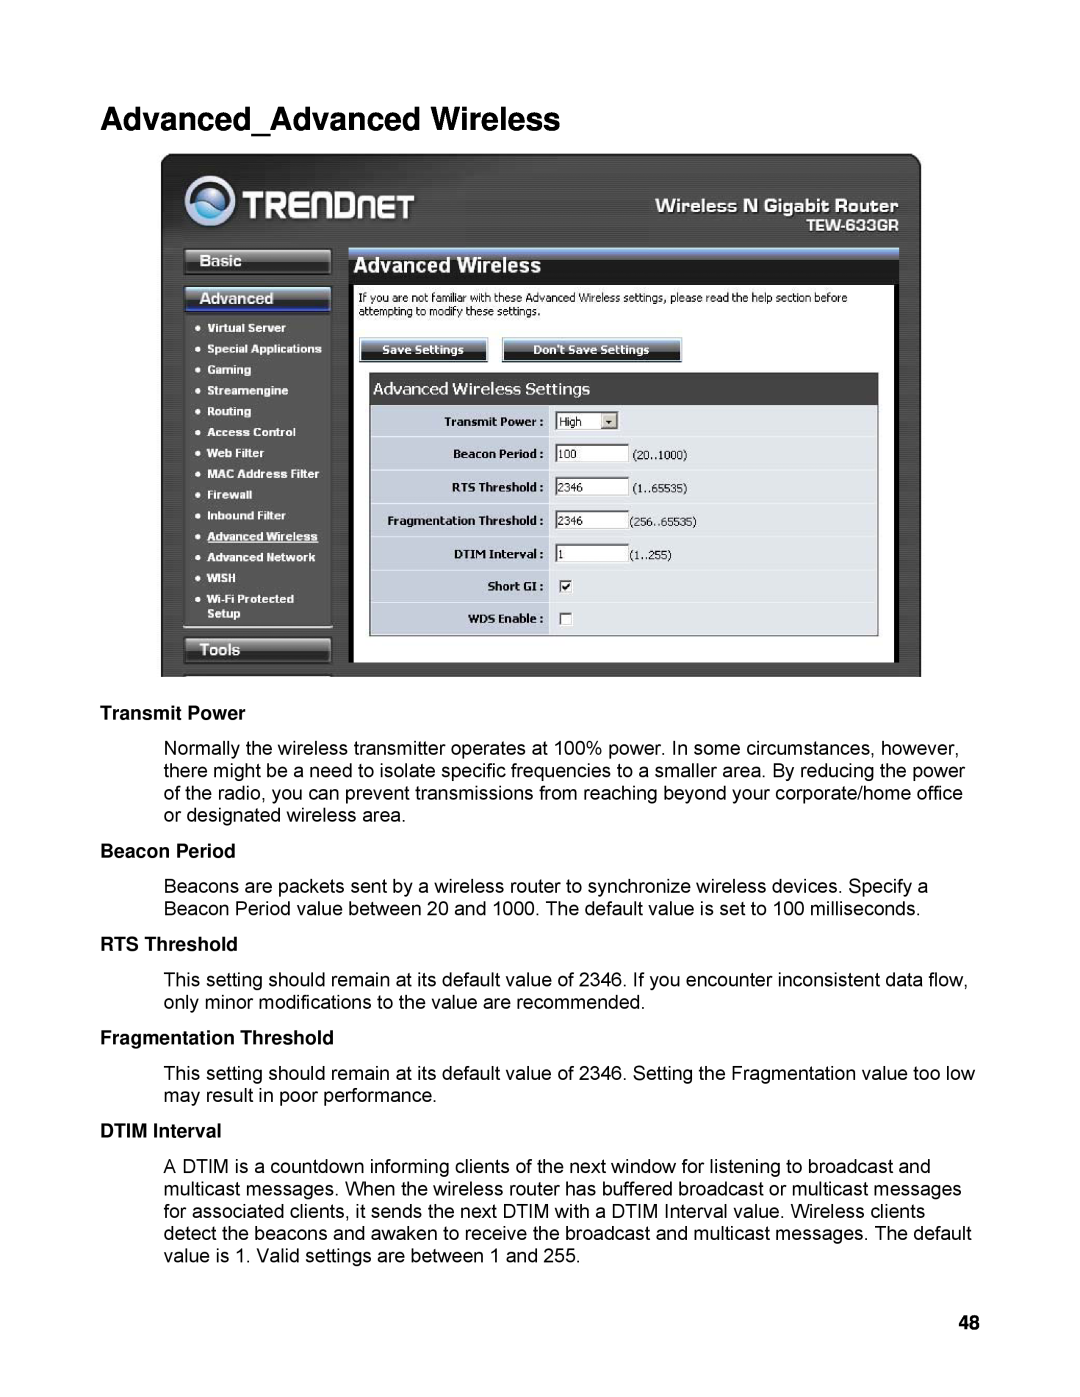 TRENDnet TEW-633GR manual AdvancedAdvanced Wireless, Transmit Power, Beacon Period, RTS Threshold, Fragmentation Threshold 